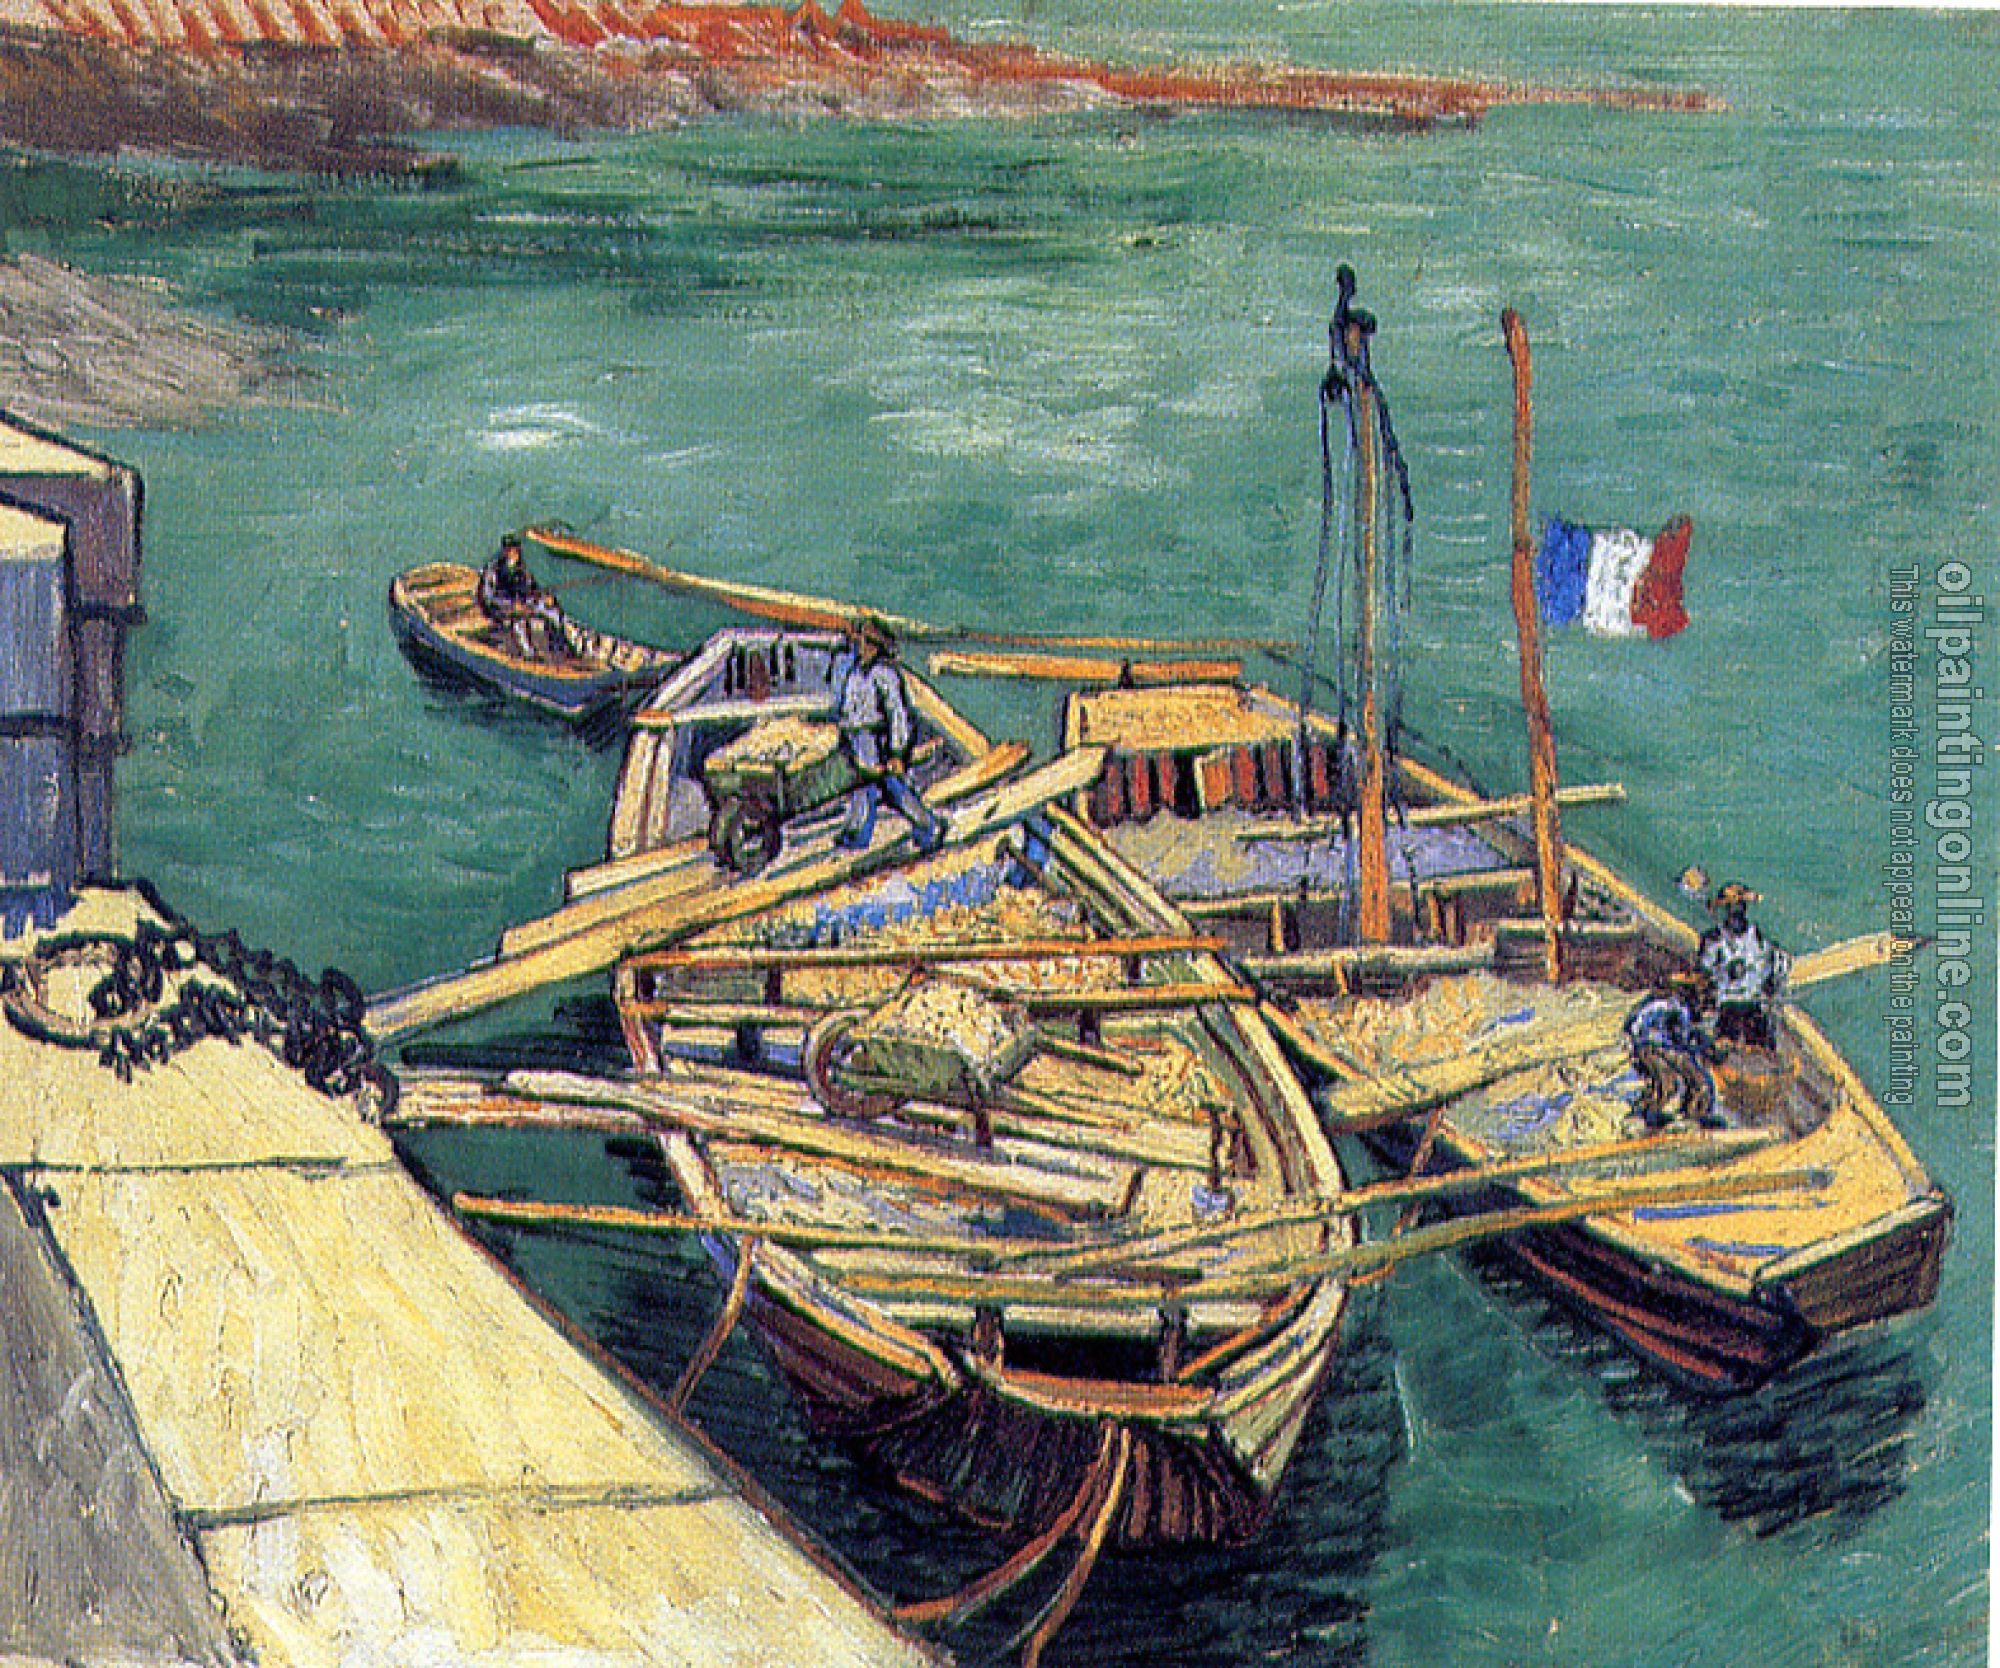 Gogh, Vincent van - Quay with men unloading sand barges